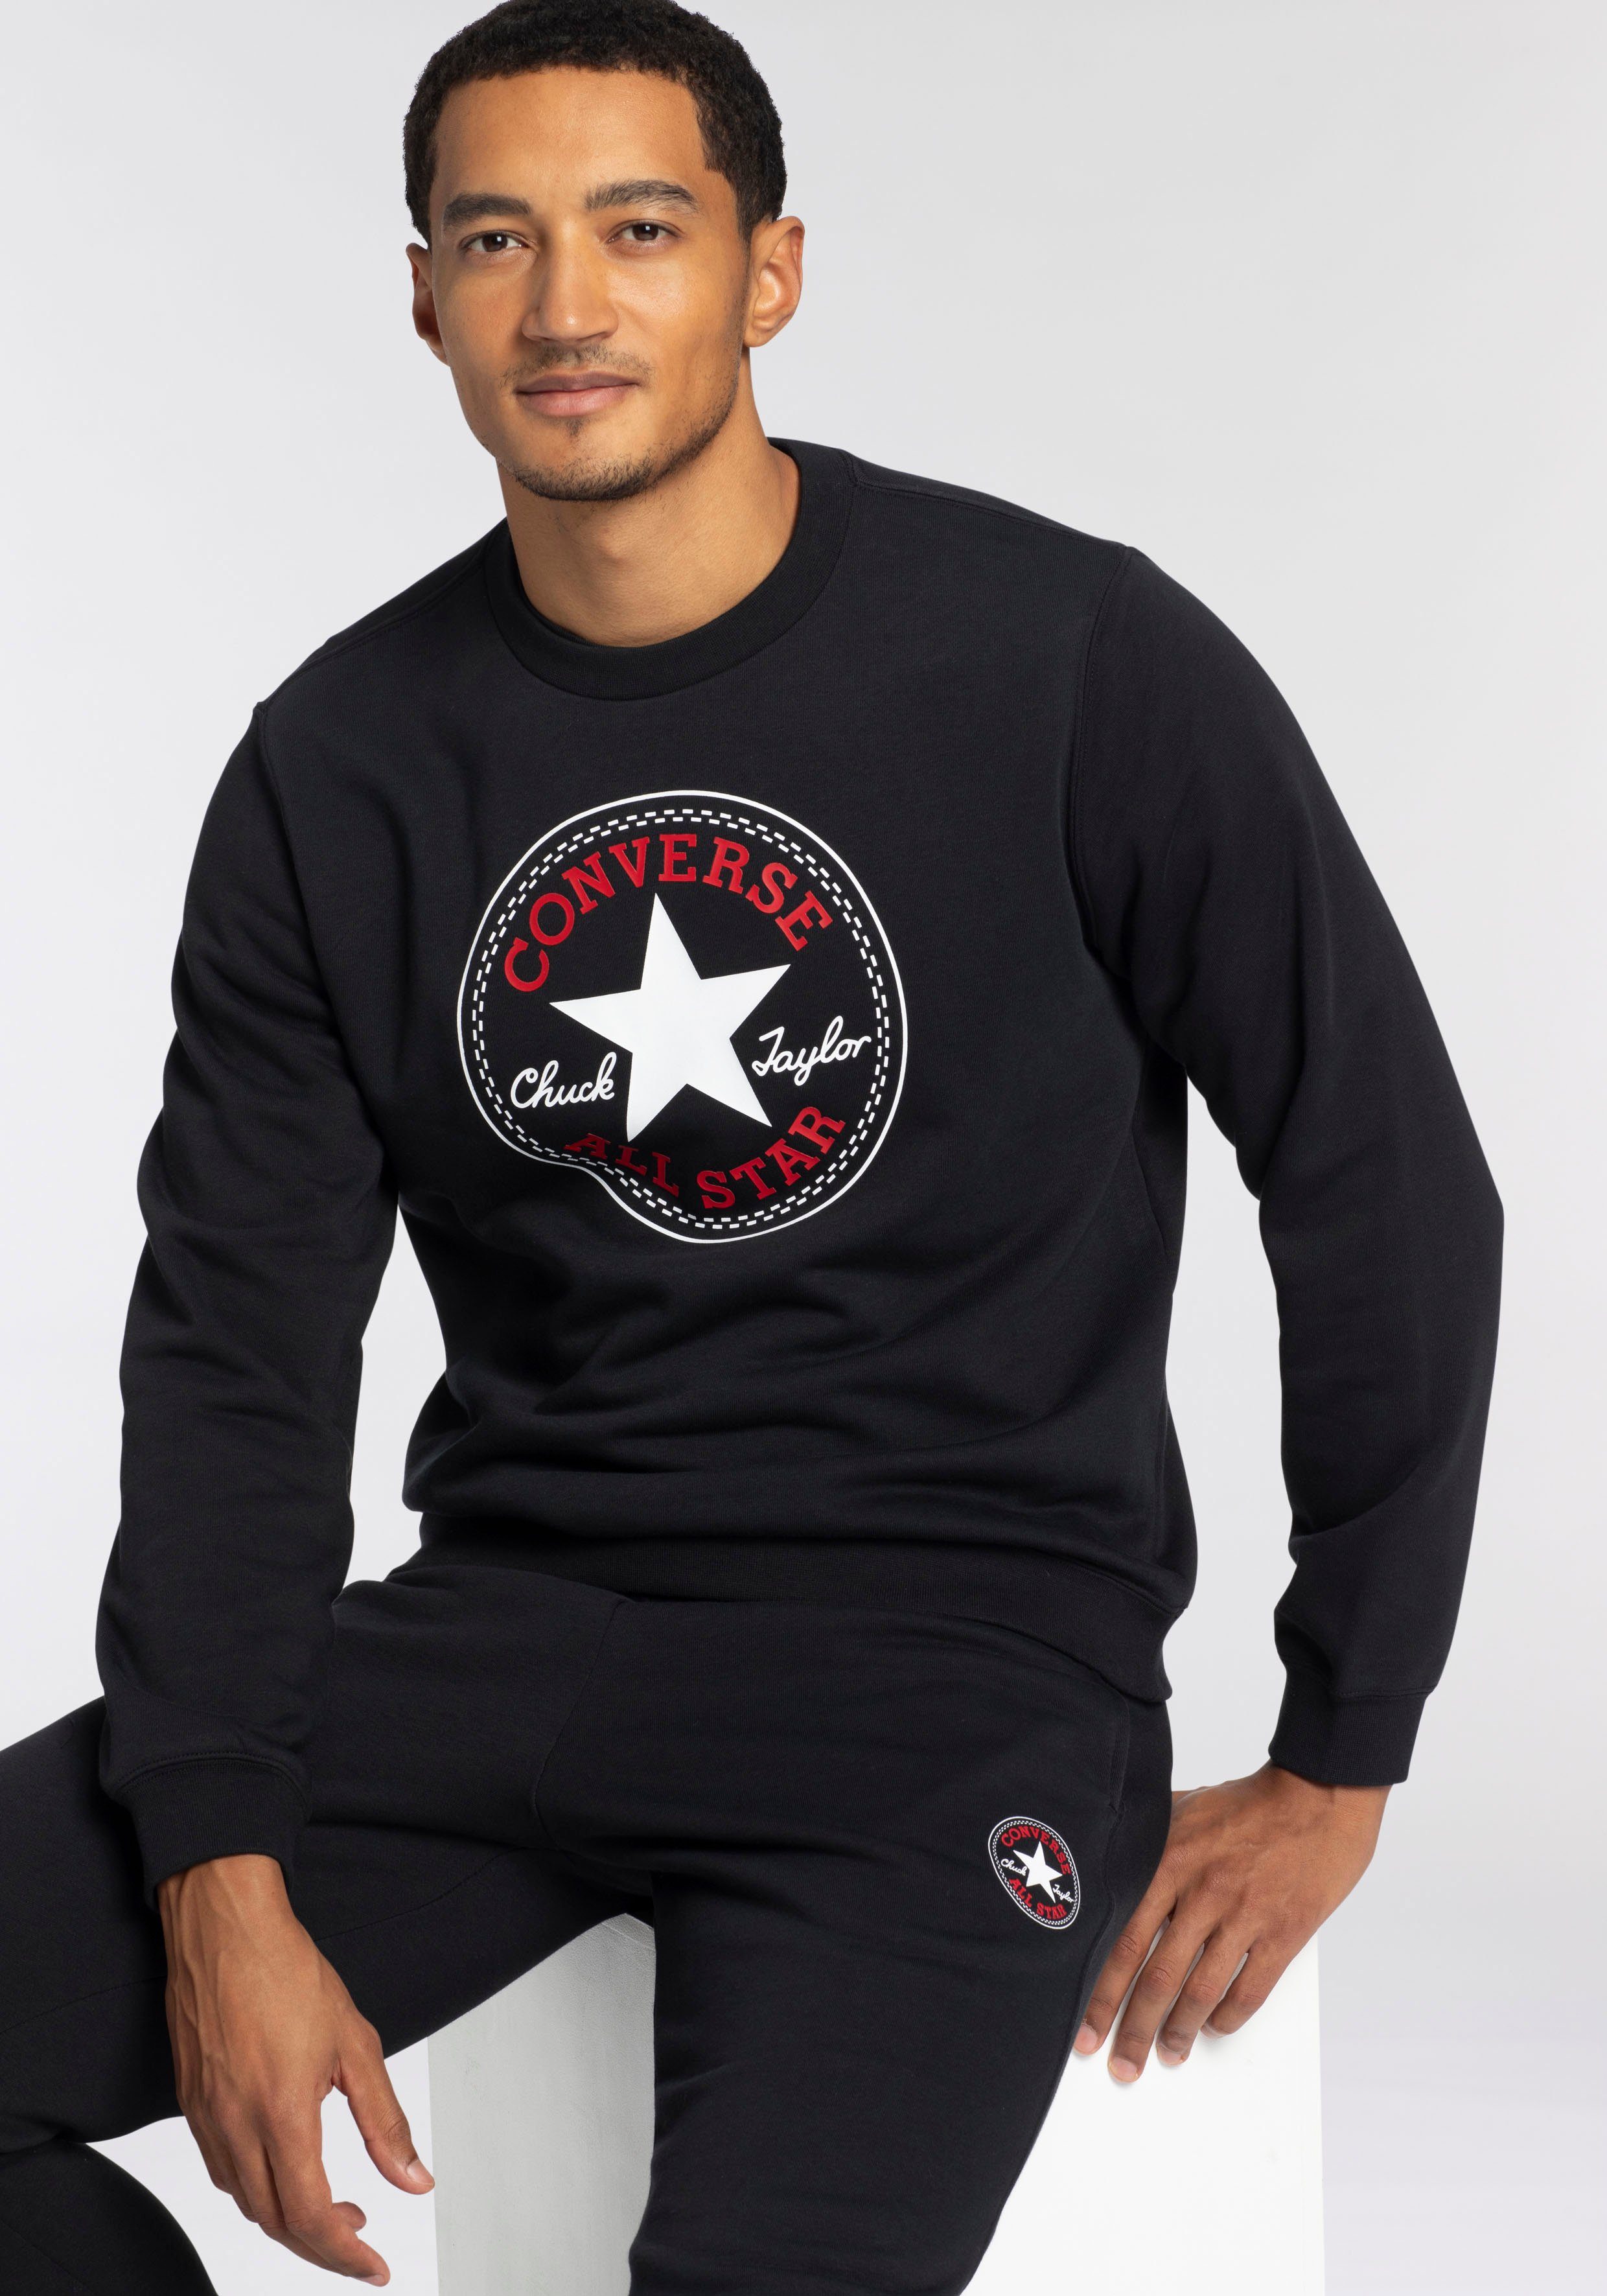 PATCH ALL Converse black1 BACK UNISEX BRUSHED Sweatshirt STAR